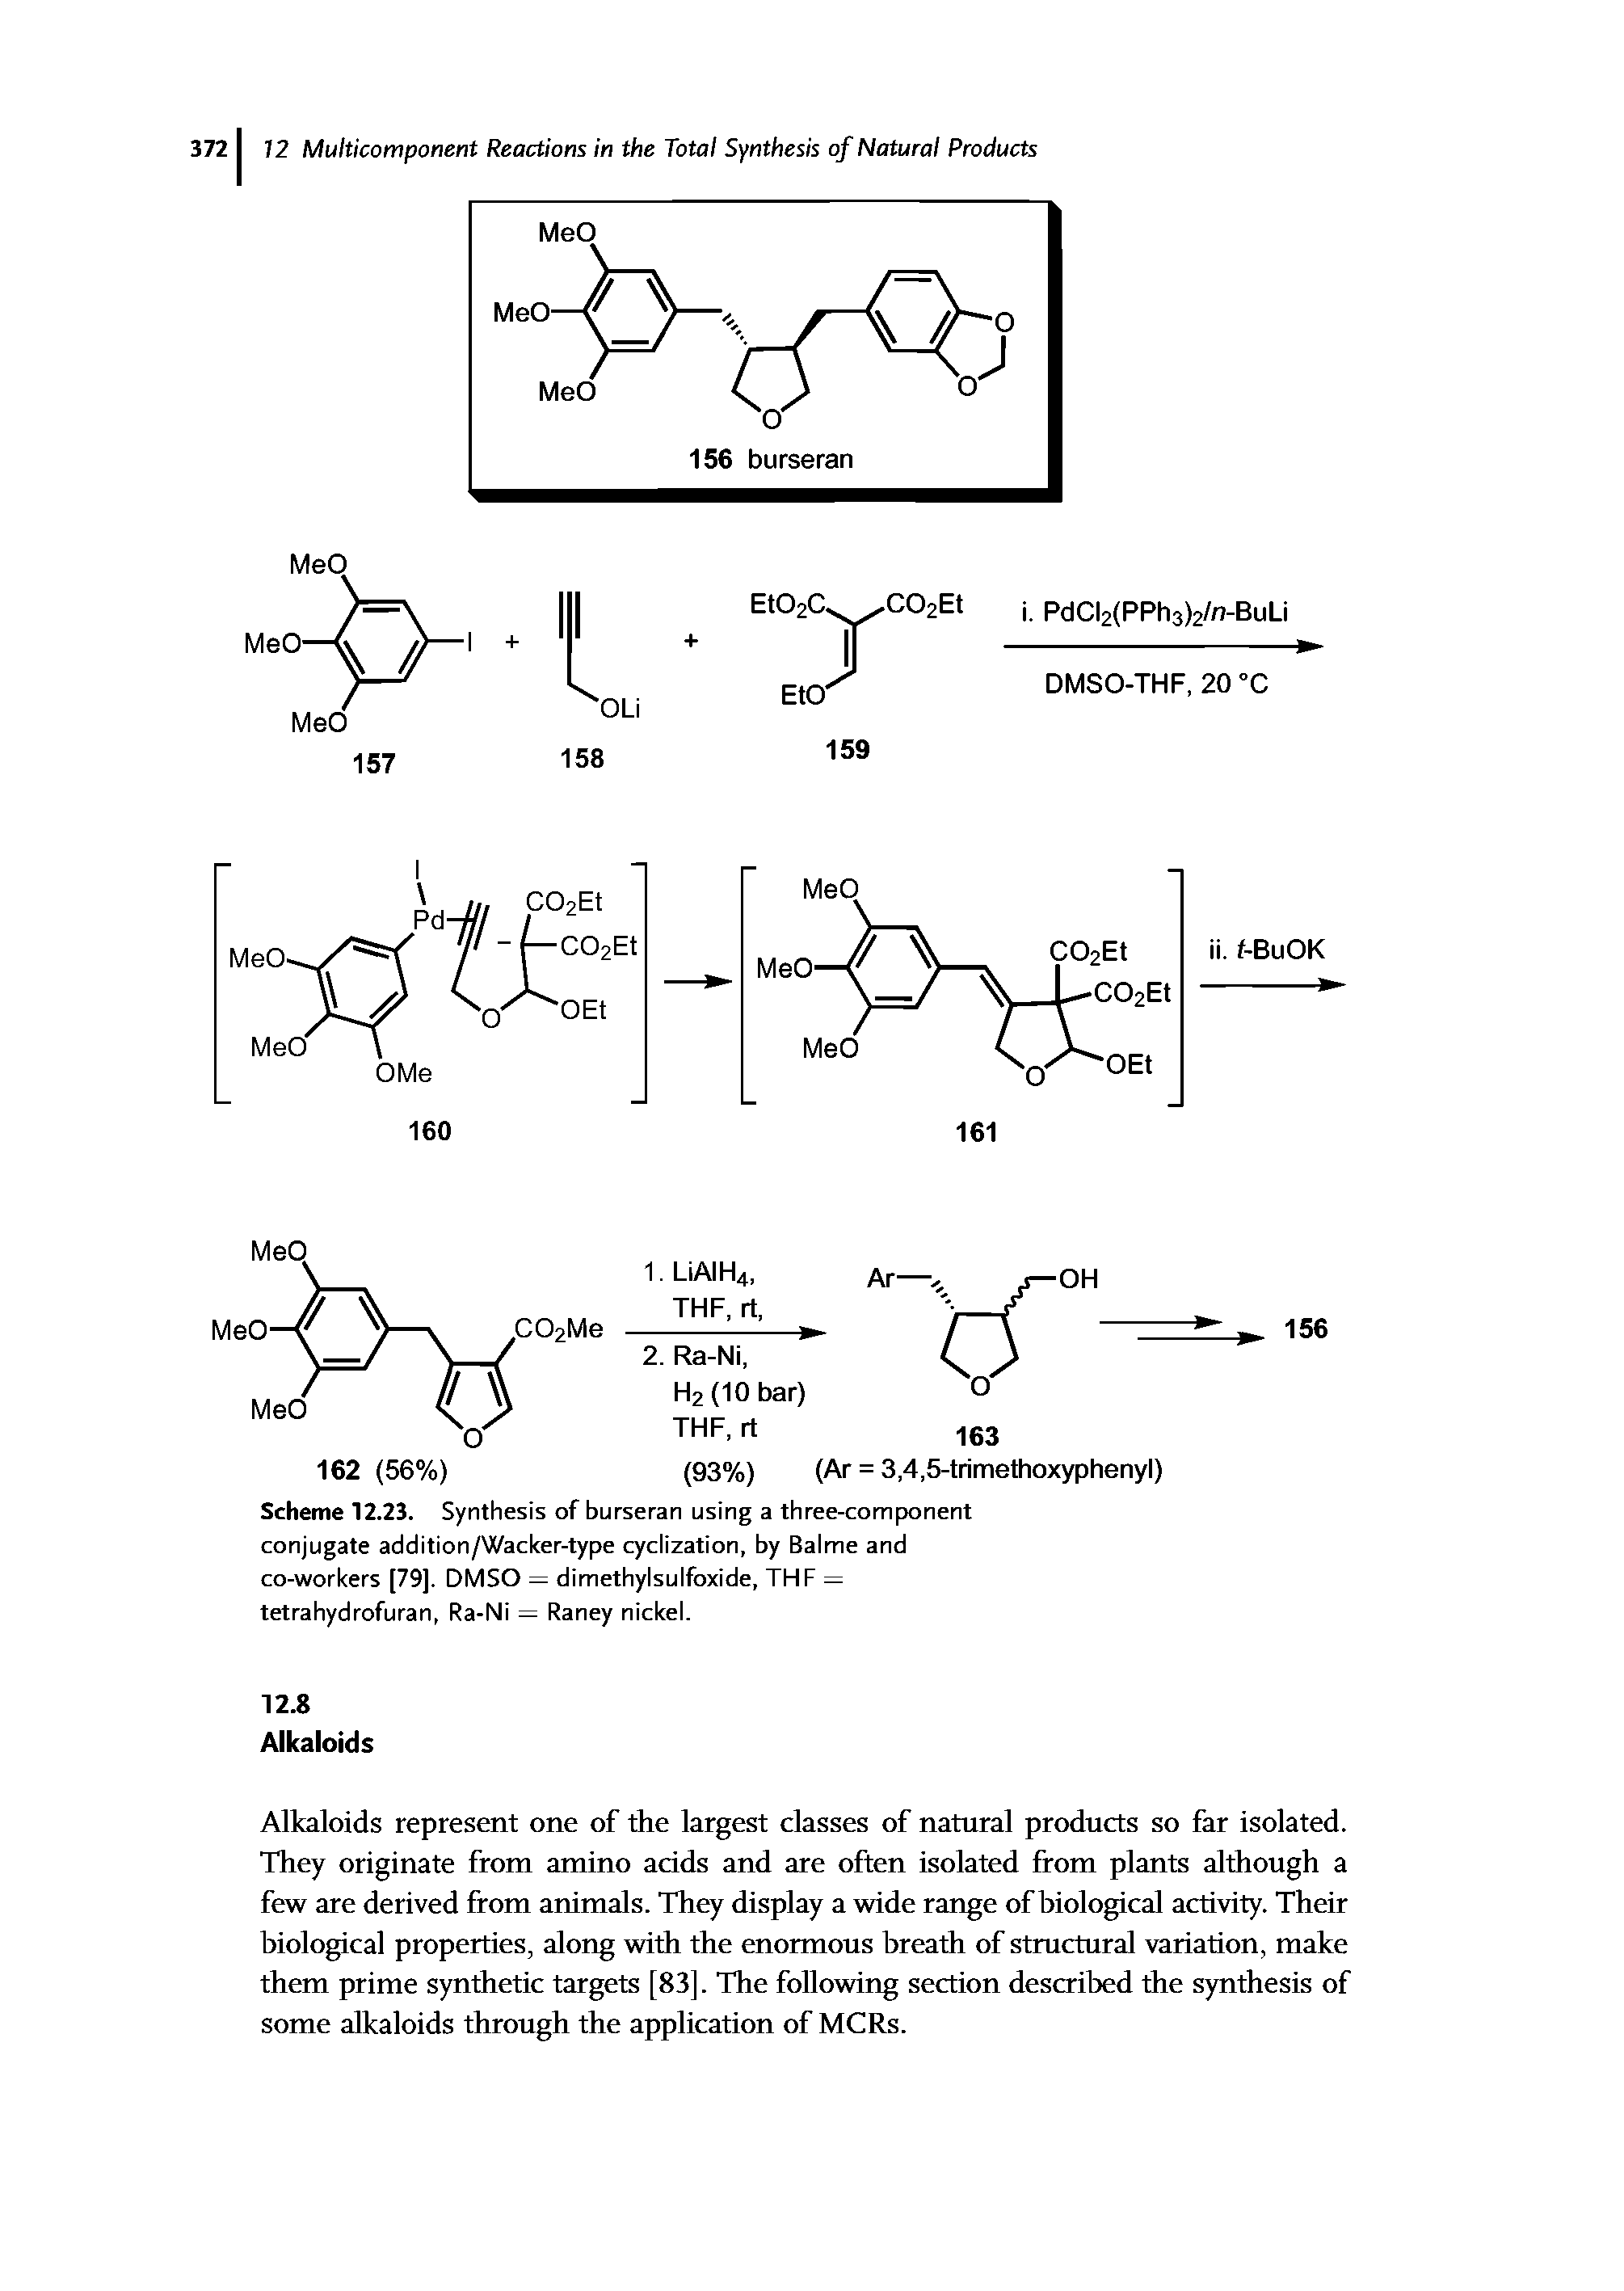 Scheme 12.23. Synthesis of burseran using a three-component conjugate addition/Wacker-type cyclization, by Balme and co-workers [79]. DMSO = dimethylsulfoxide, THF = tetrahydrofuran, Ra-Ni = Raney nickel.